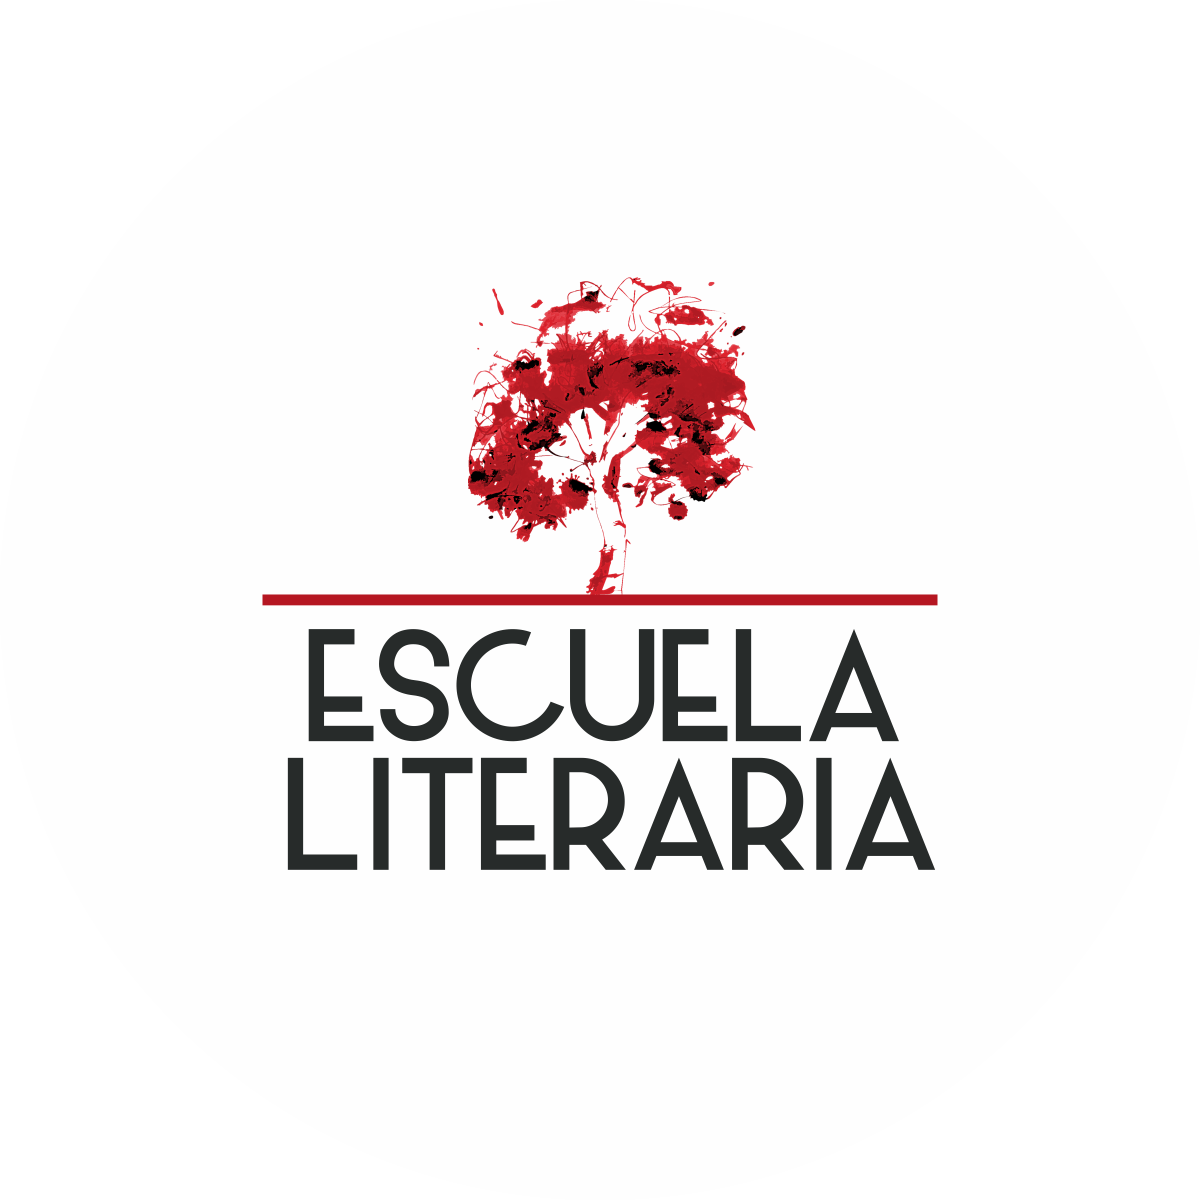 Logotipo Escuela Literaria